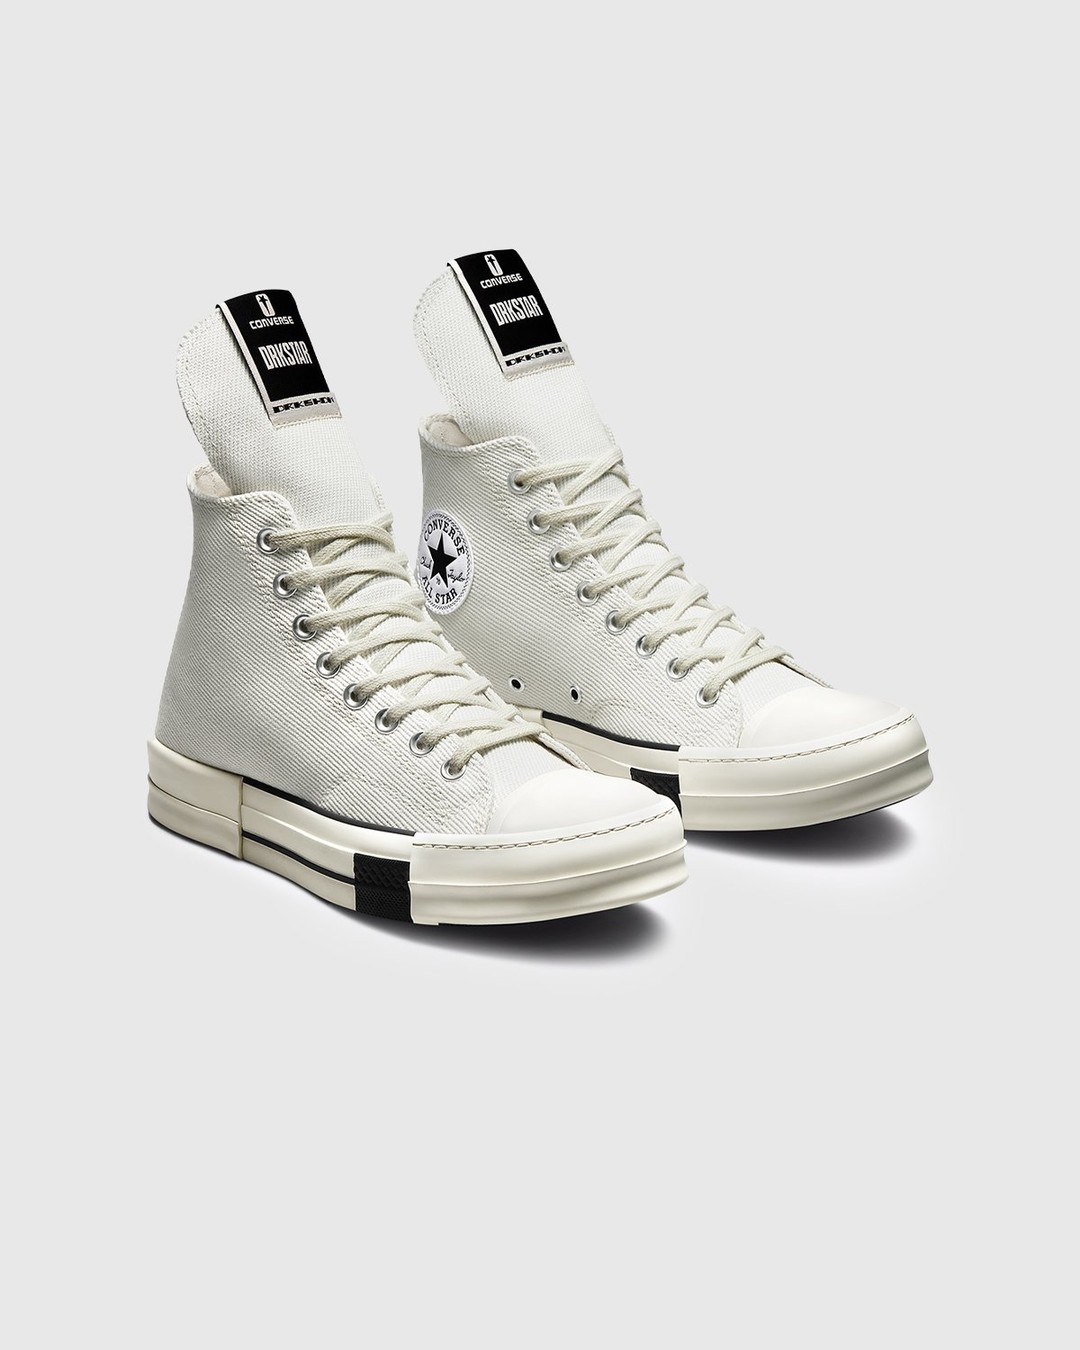 Converse x Rick Owens – DRKSTAR Chuck 70 High Lily White Egret Black - Sneakers - White - Image 3